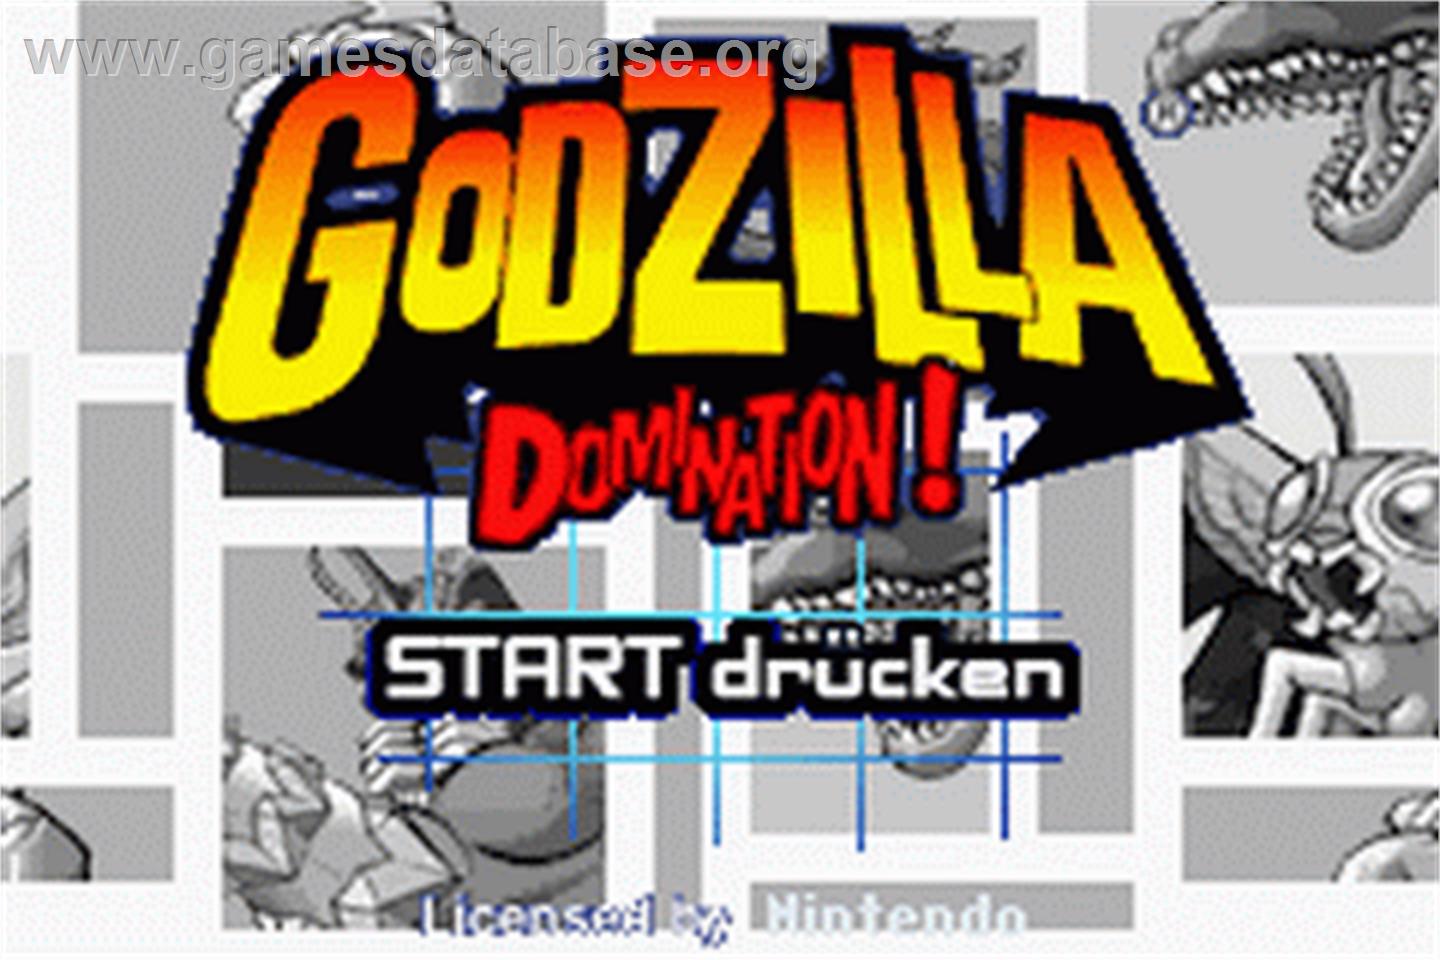 Godzilla: Domination - Nintendo Game Boy Advance - Artwork - Title Screen